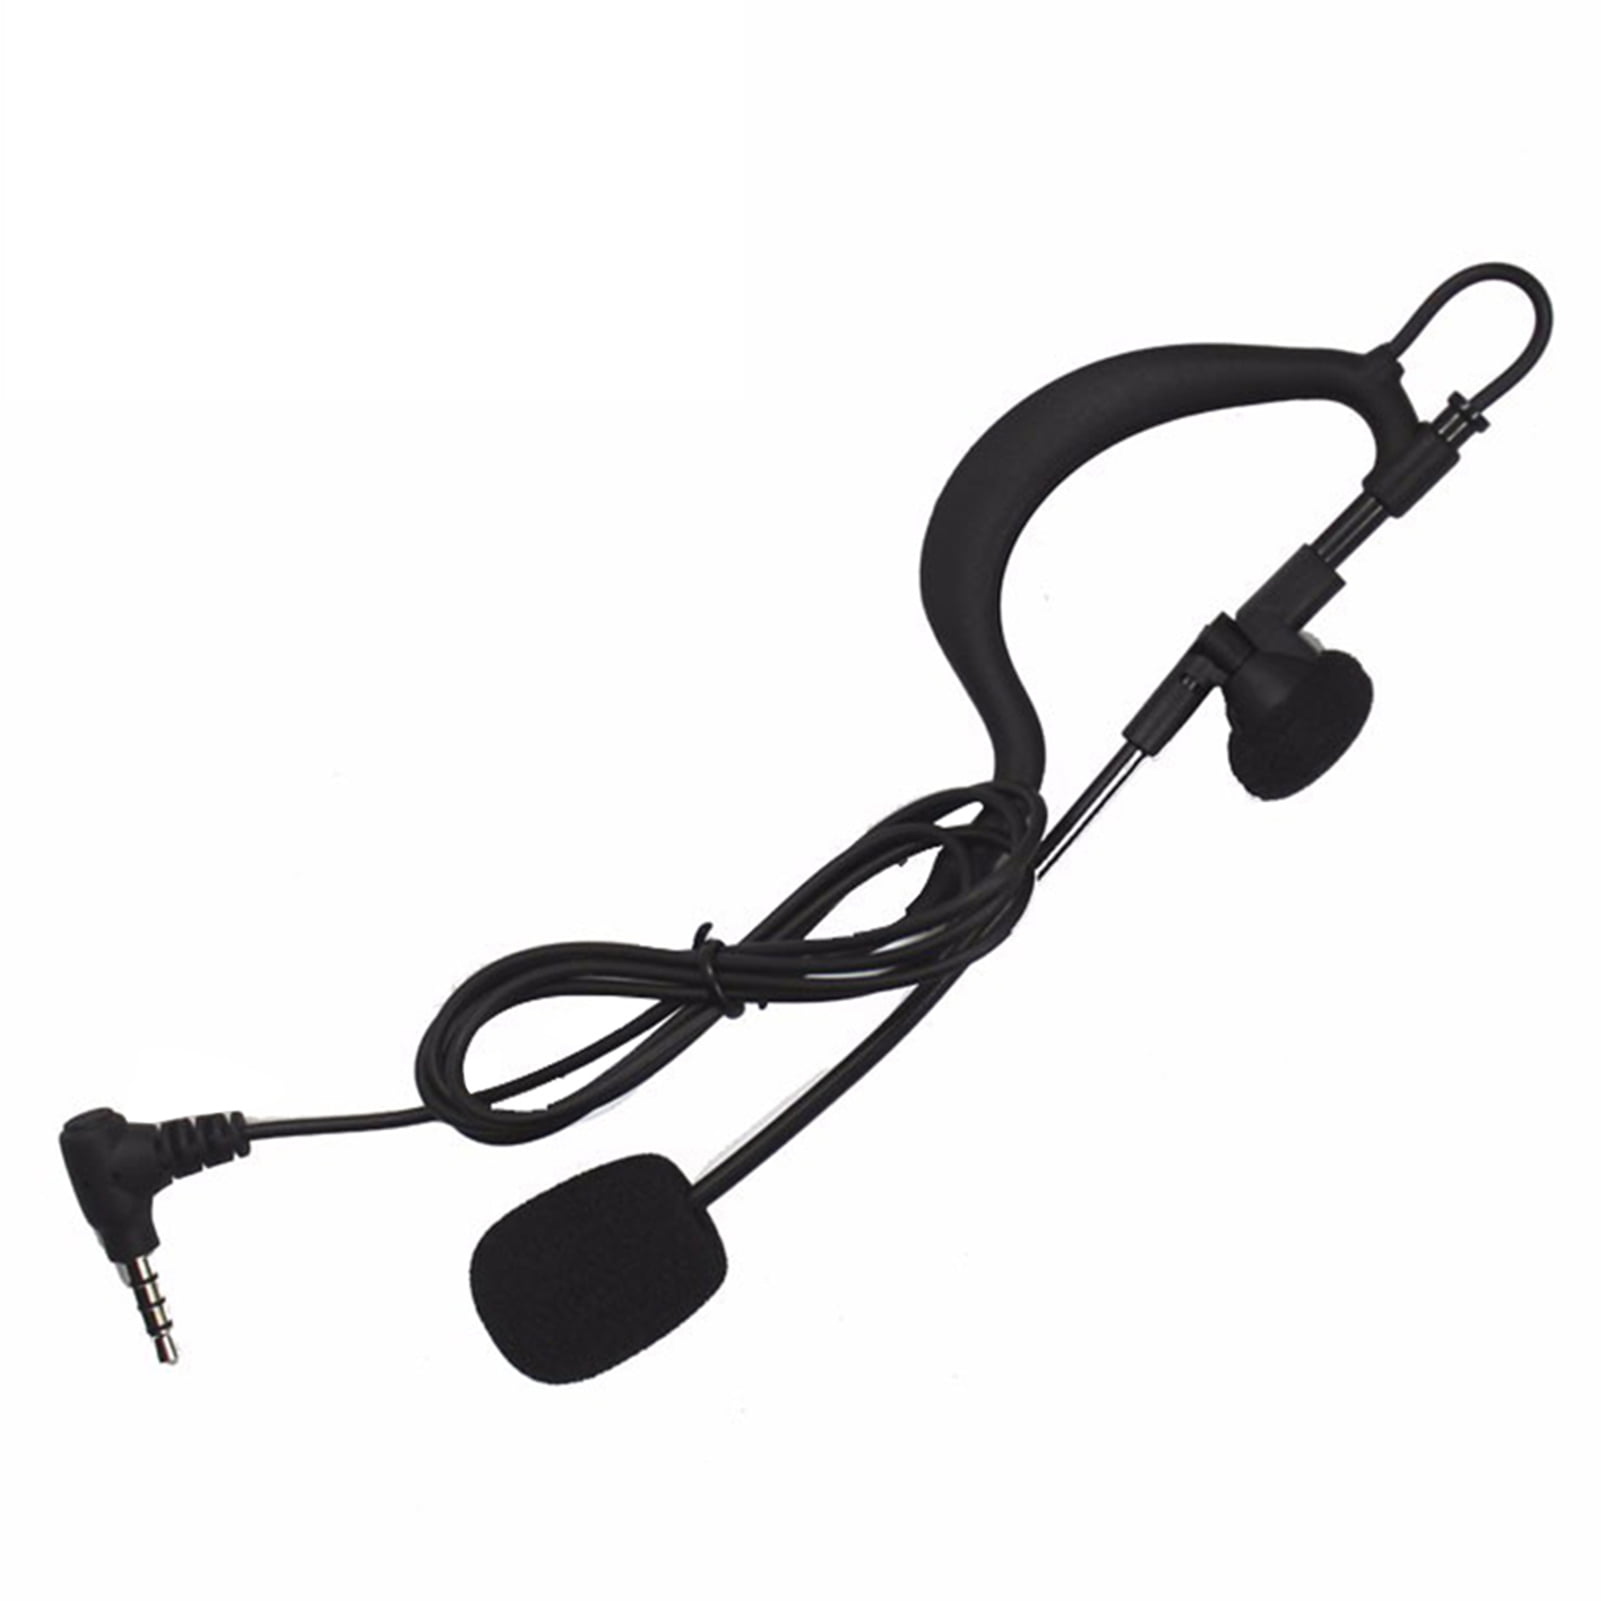 For Vnetphone V6 V4 3.5mm Referee Headset Earhook Intercom Headphone New 